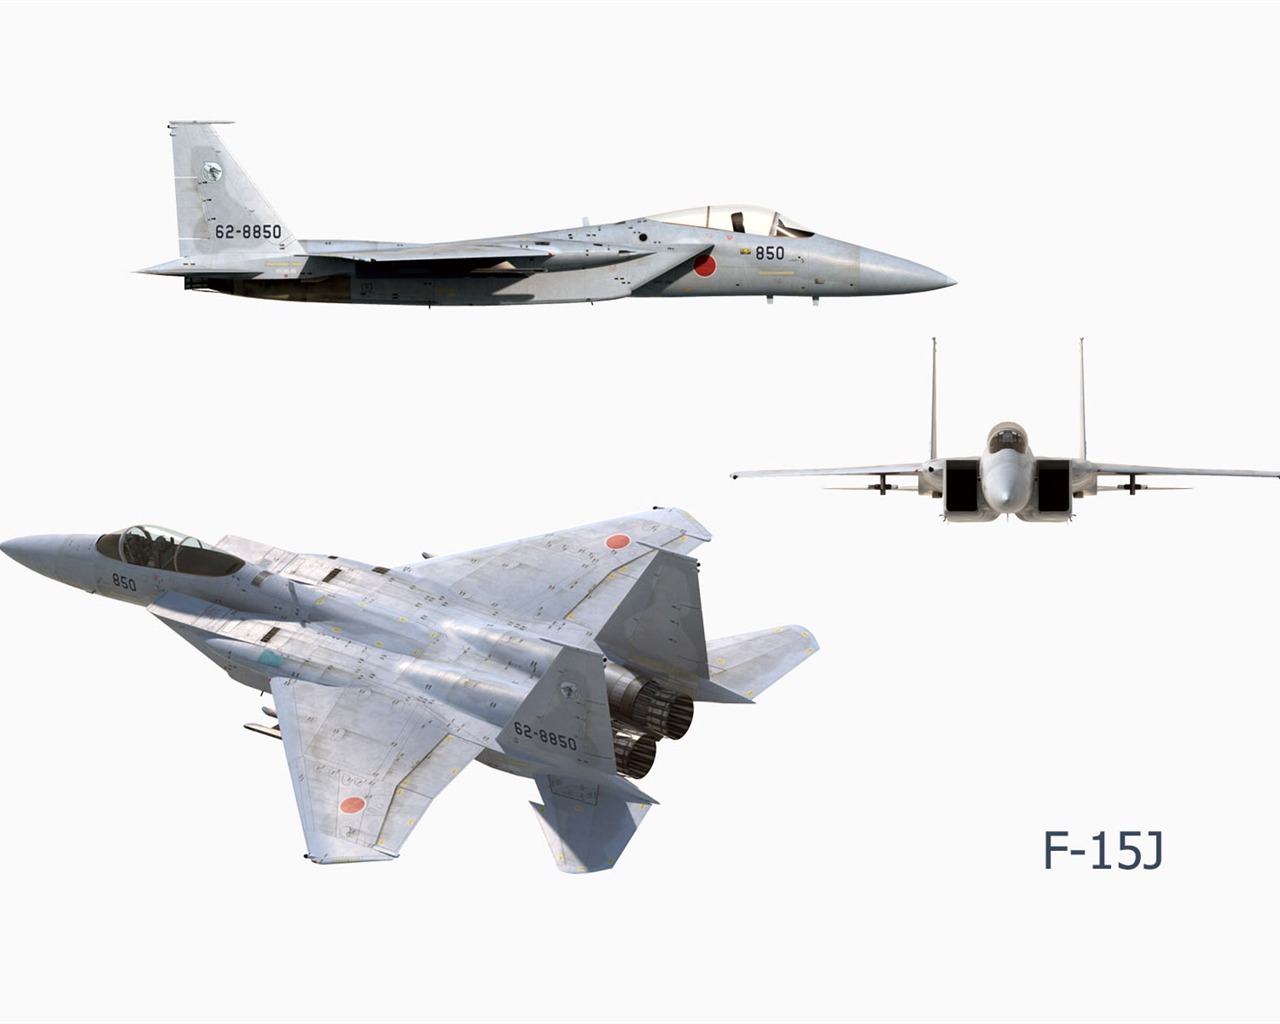 CG wallpaper vojenská letadla #22 - 1280x1024